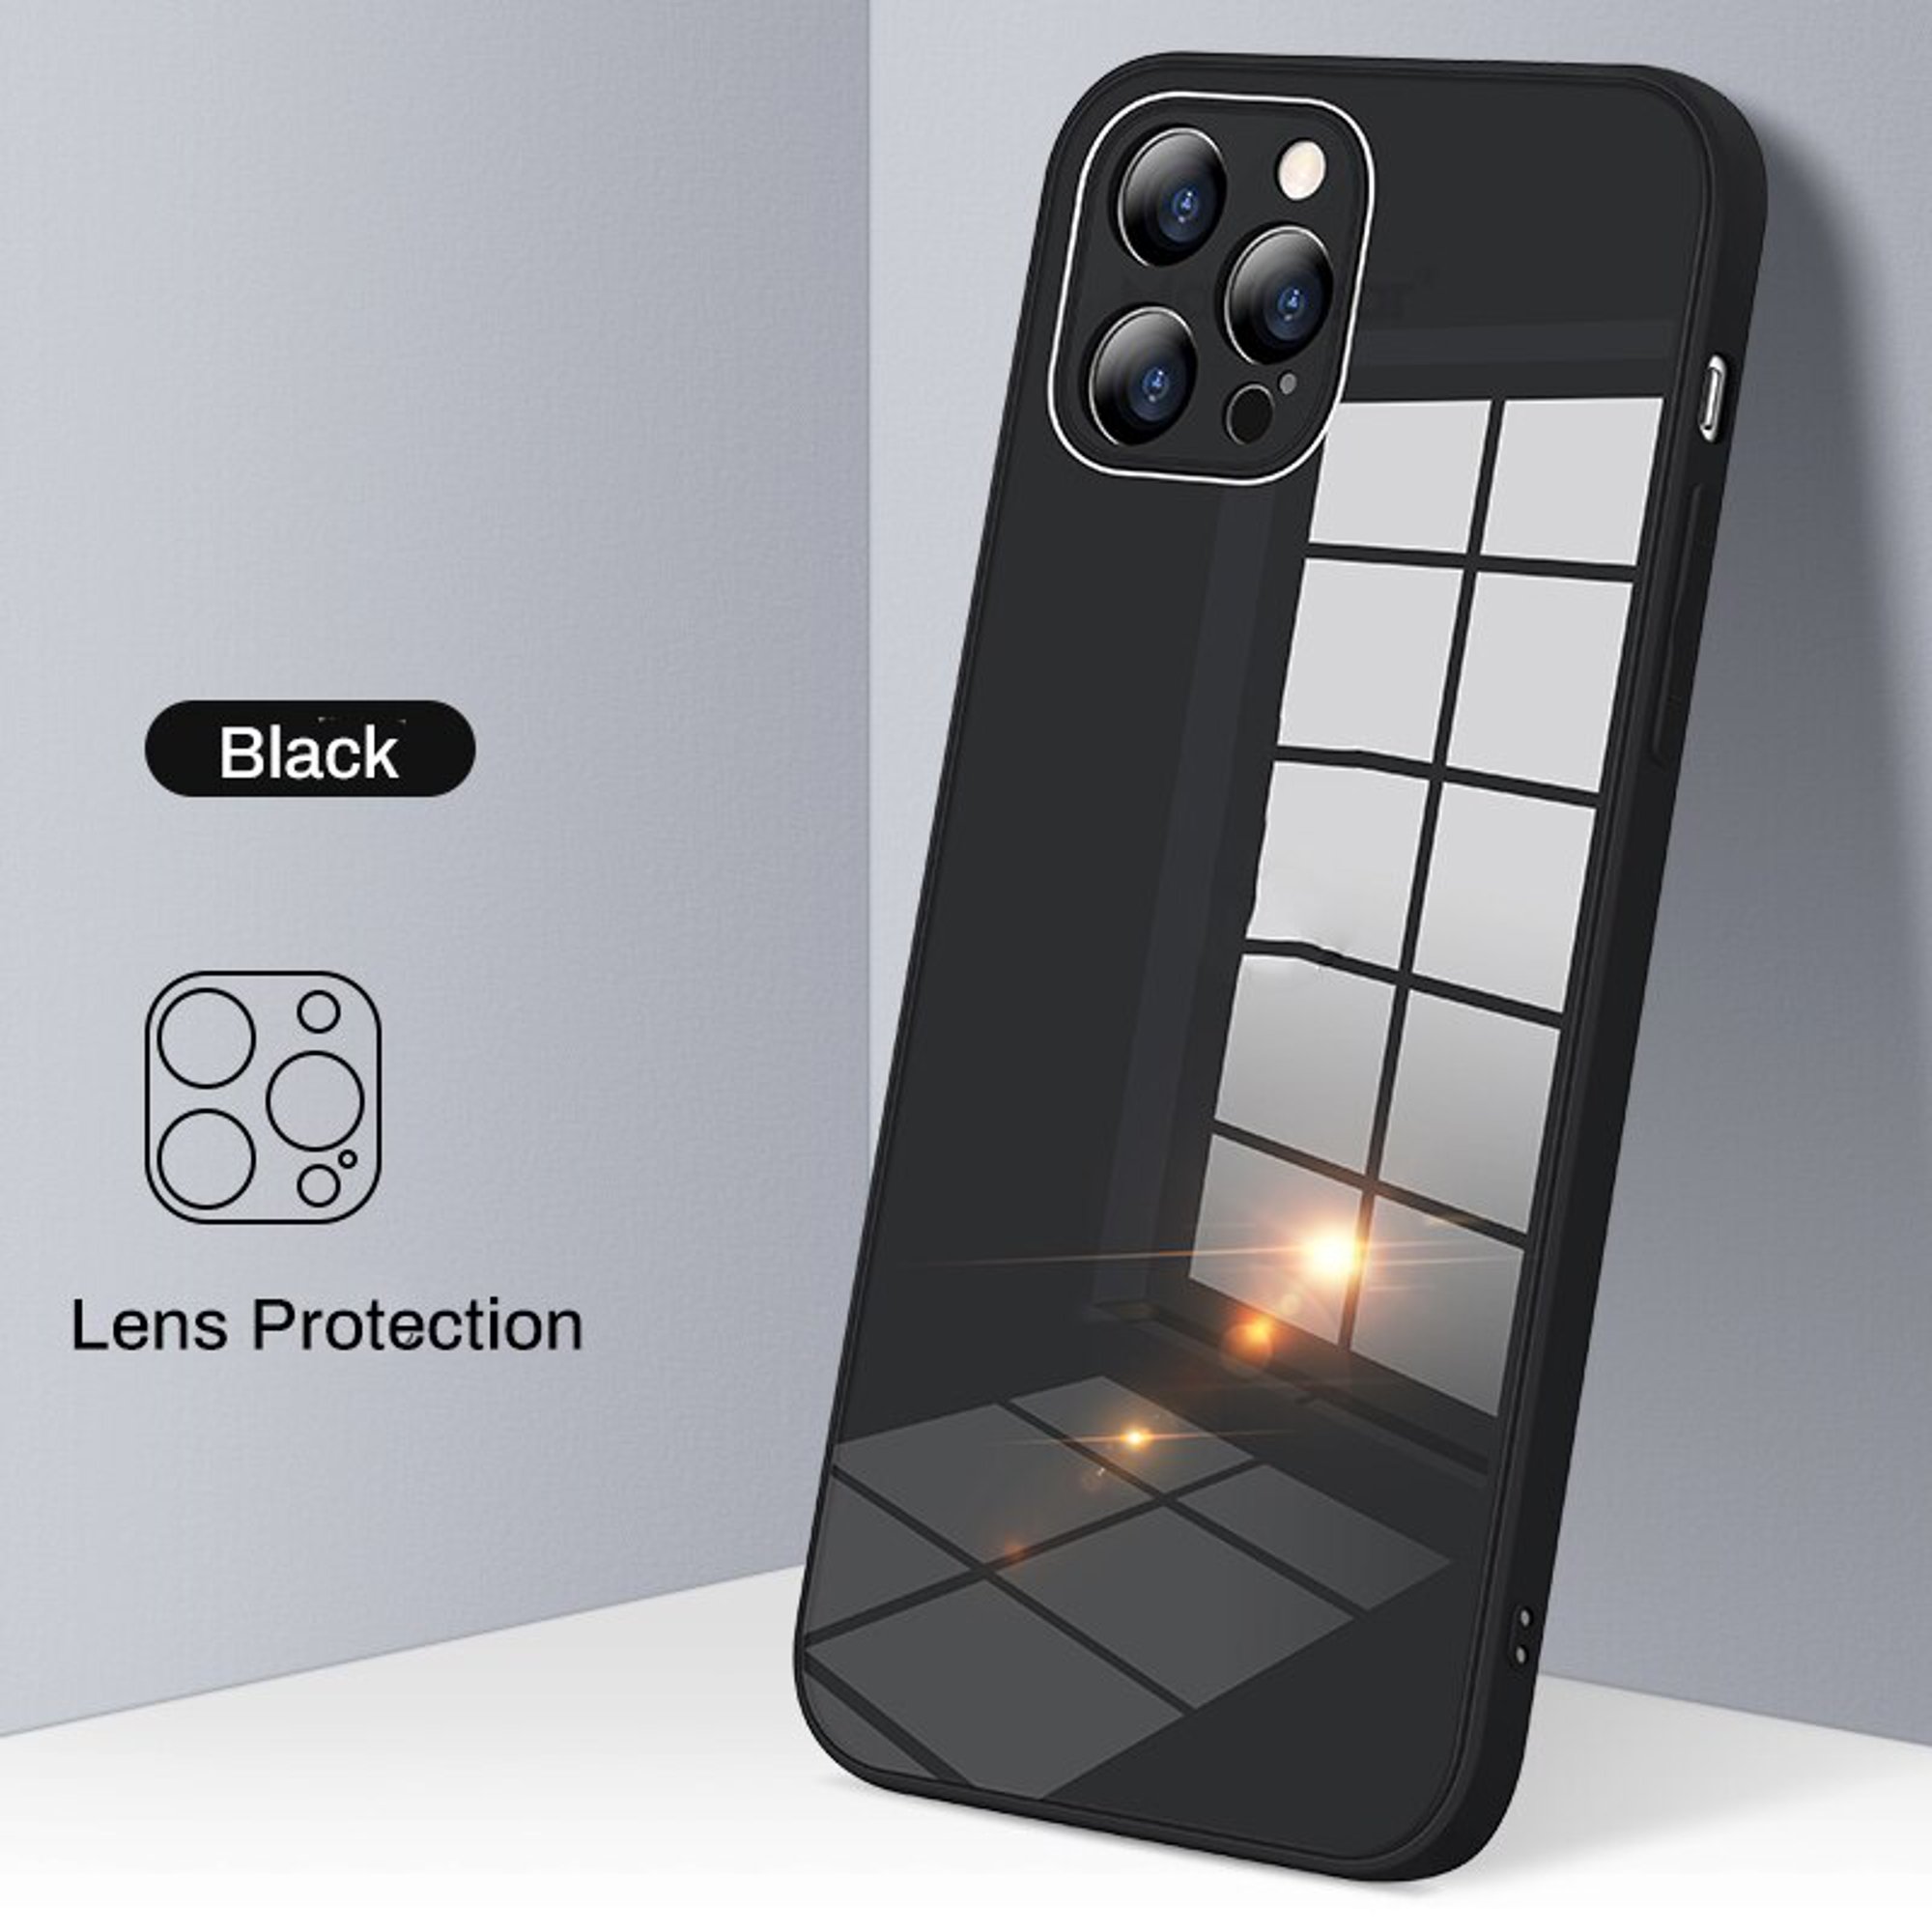 Cristal protector de teléfono para iPhone 11 12 Pro Max SE 2020, funda  protectora de pantalla para iPhone 7 8 Plus 6 6S Plus 5S, vidrio templado  Tan Jianjun unisex